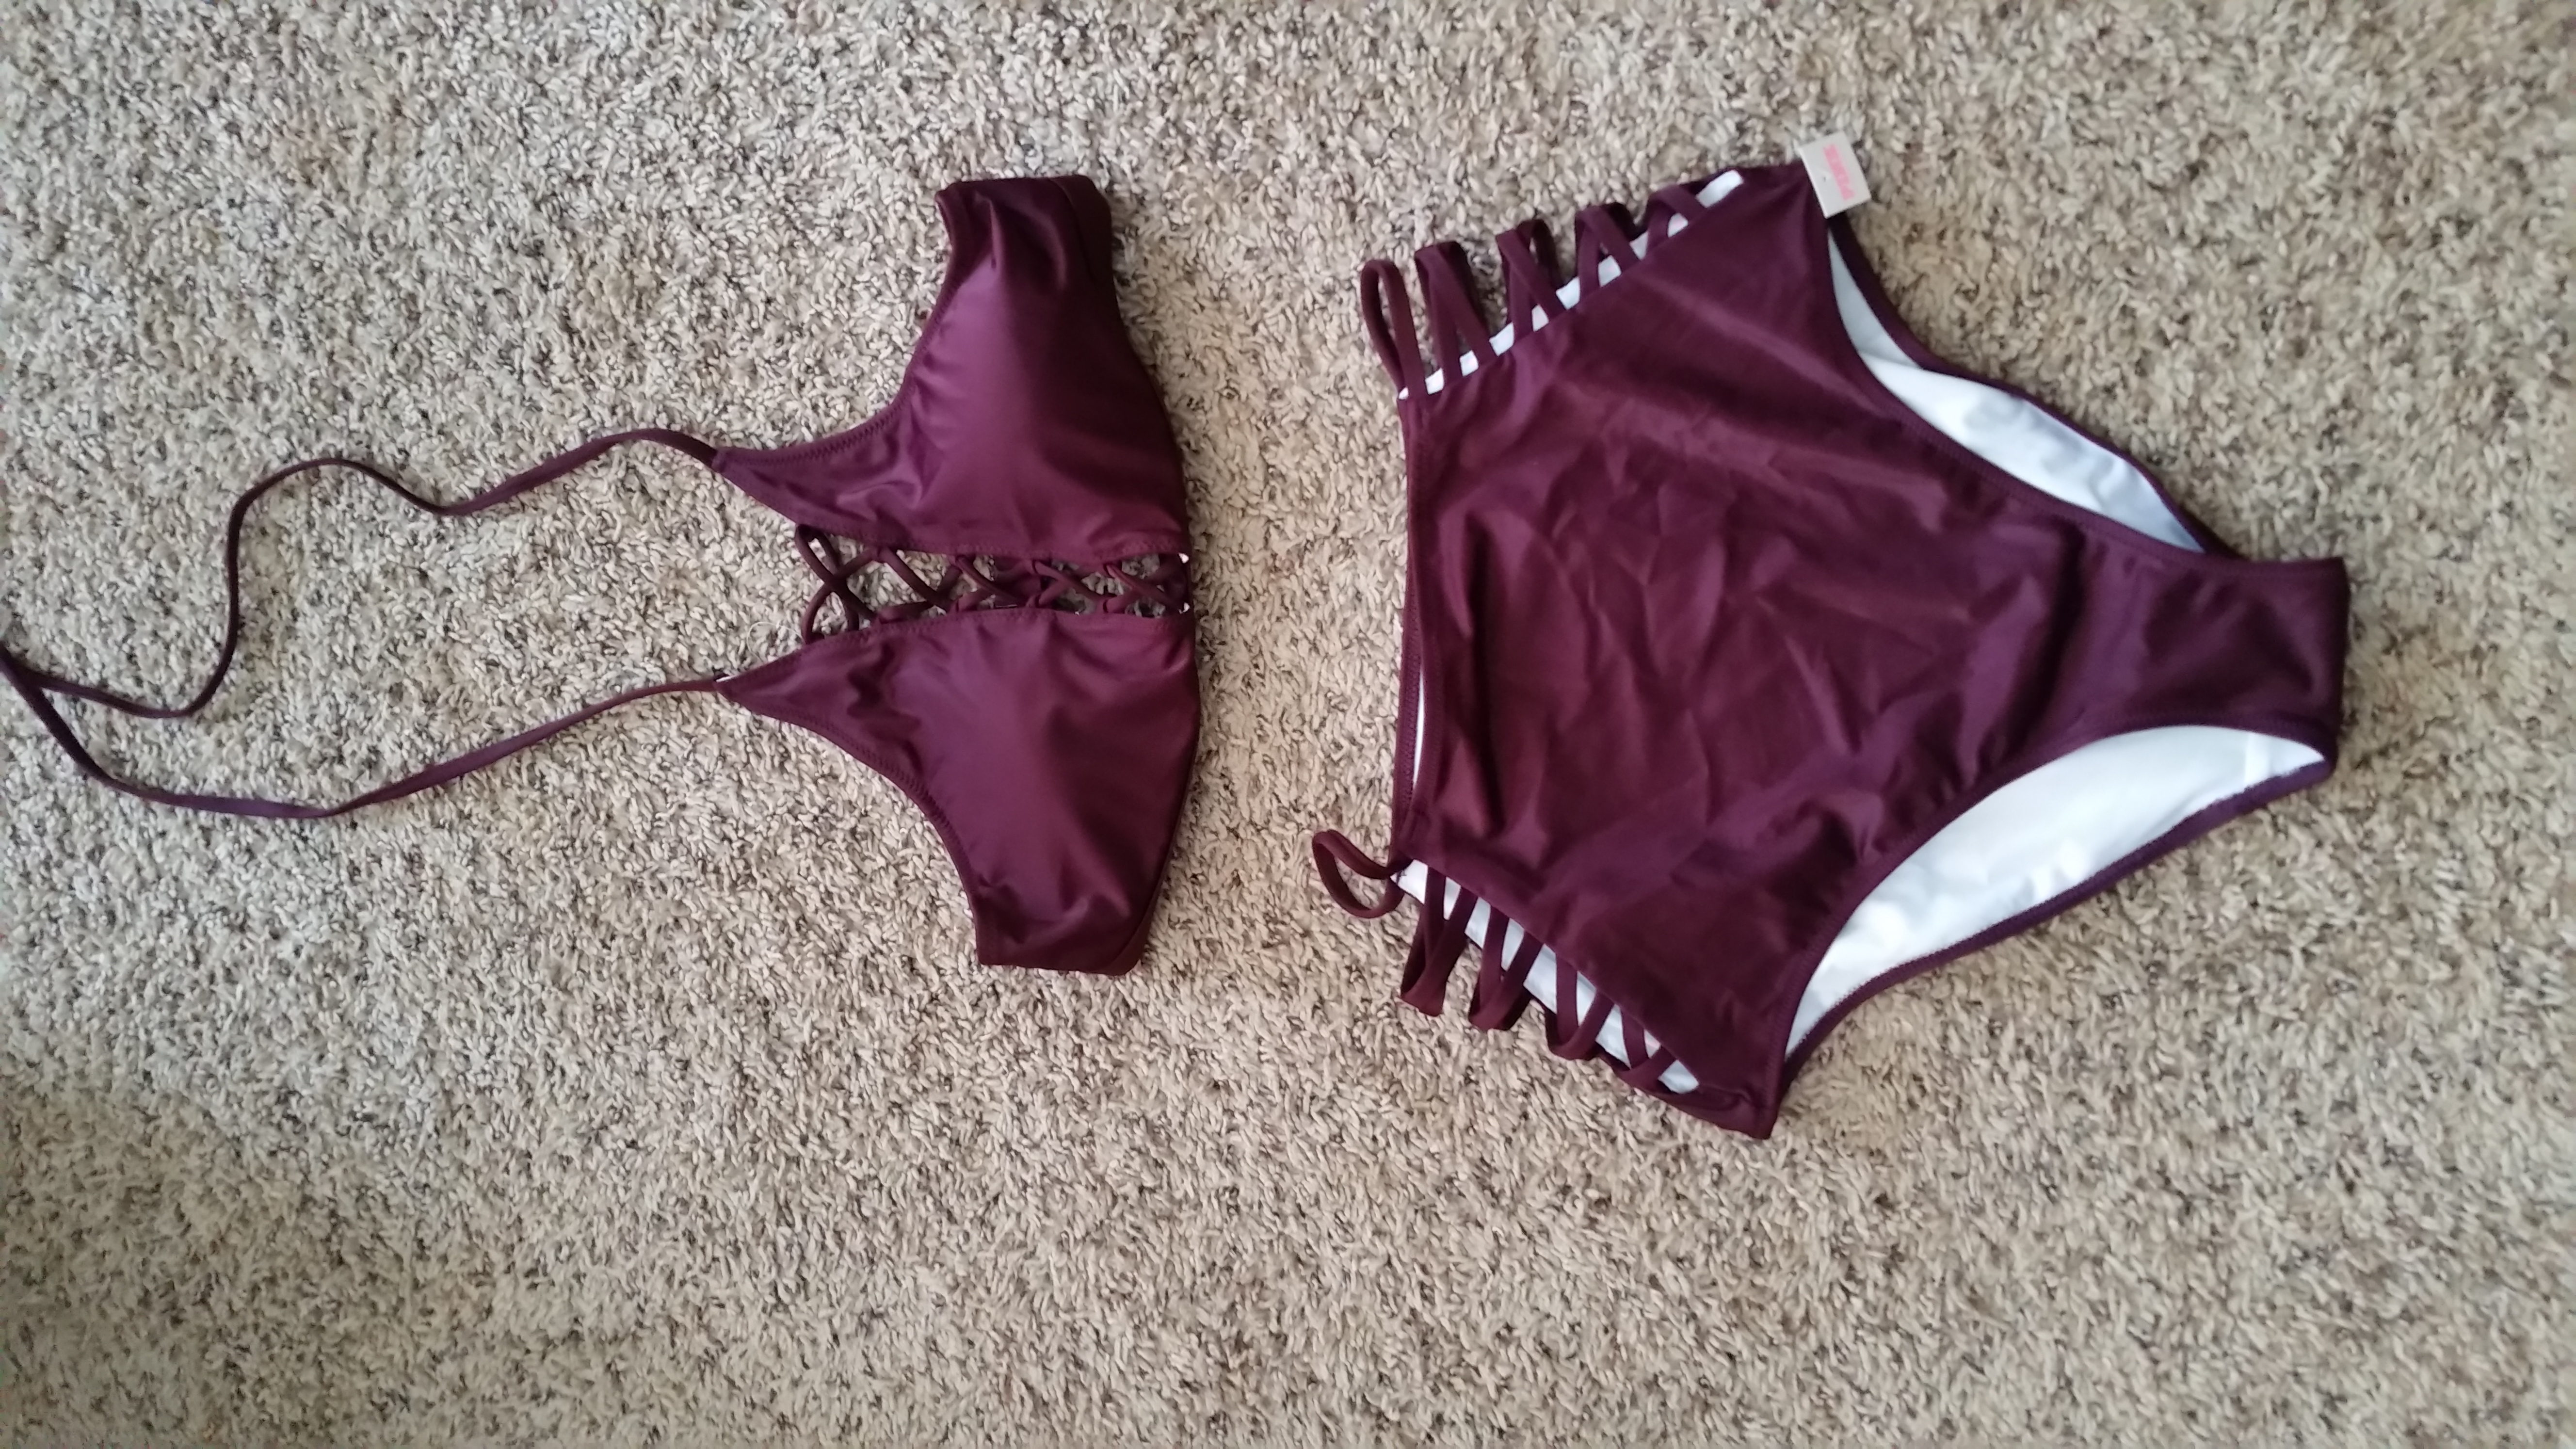 Victoria secret bathing suit for sale in Tiffin OH